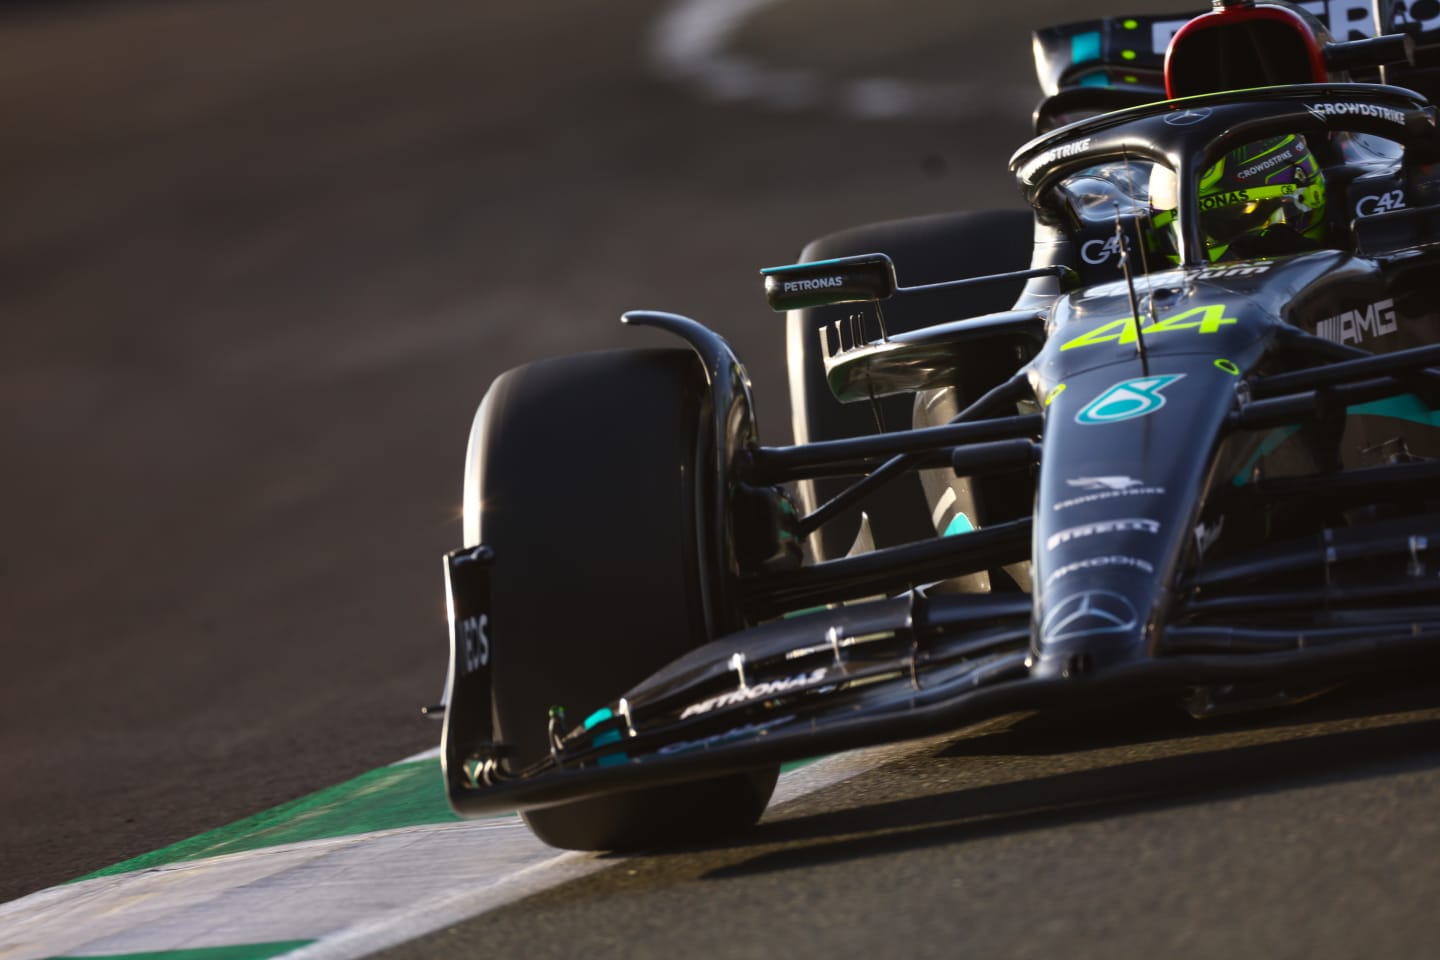 JEDDAH, SAUDI ARABIA - MARCH 17: Lewis Hamilton of Great Britain driving the (44) Mercedes AMG